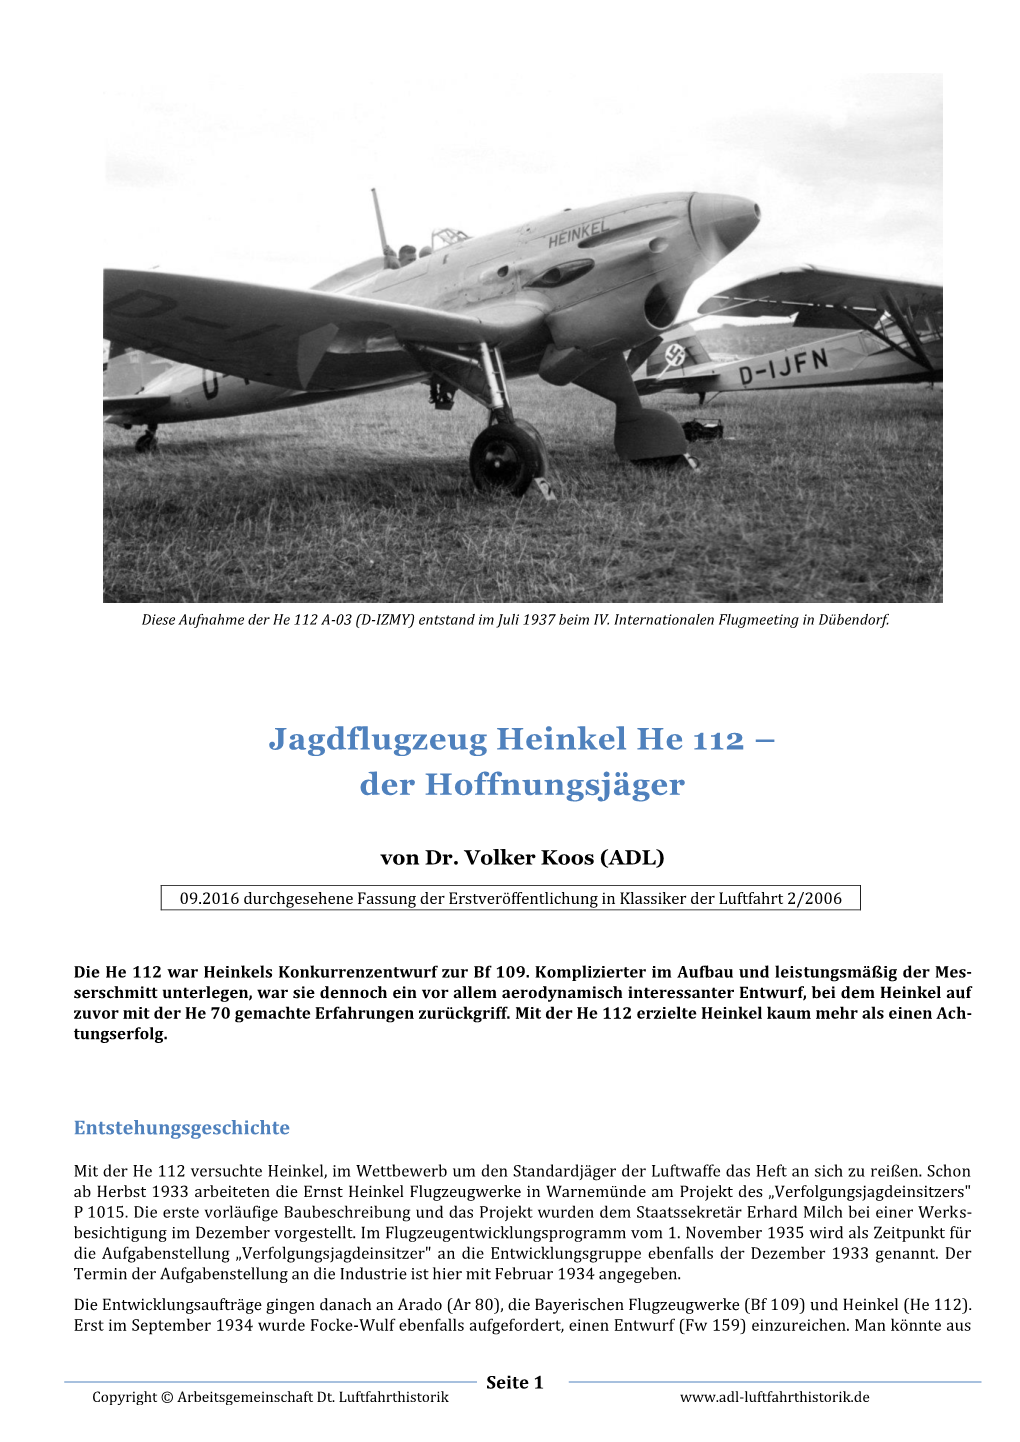 Heinkel He 112 – Der Hoffnungsjäger